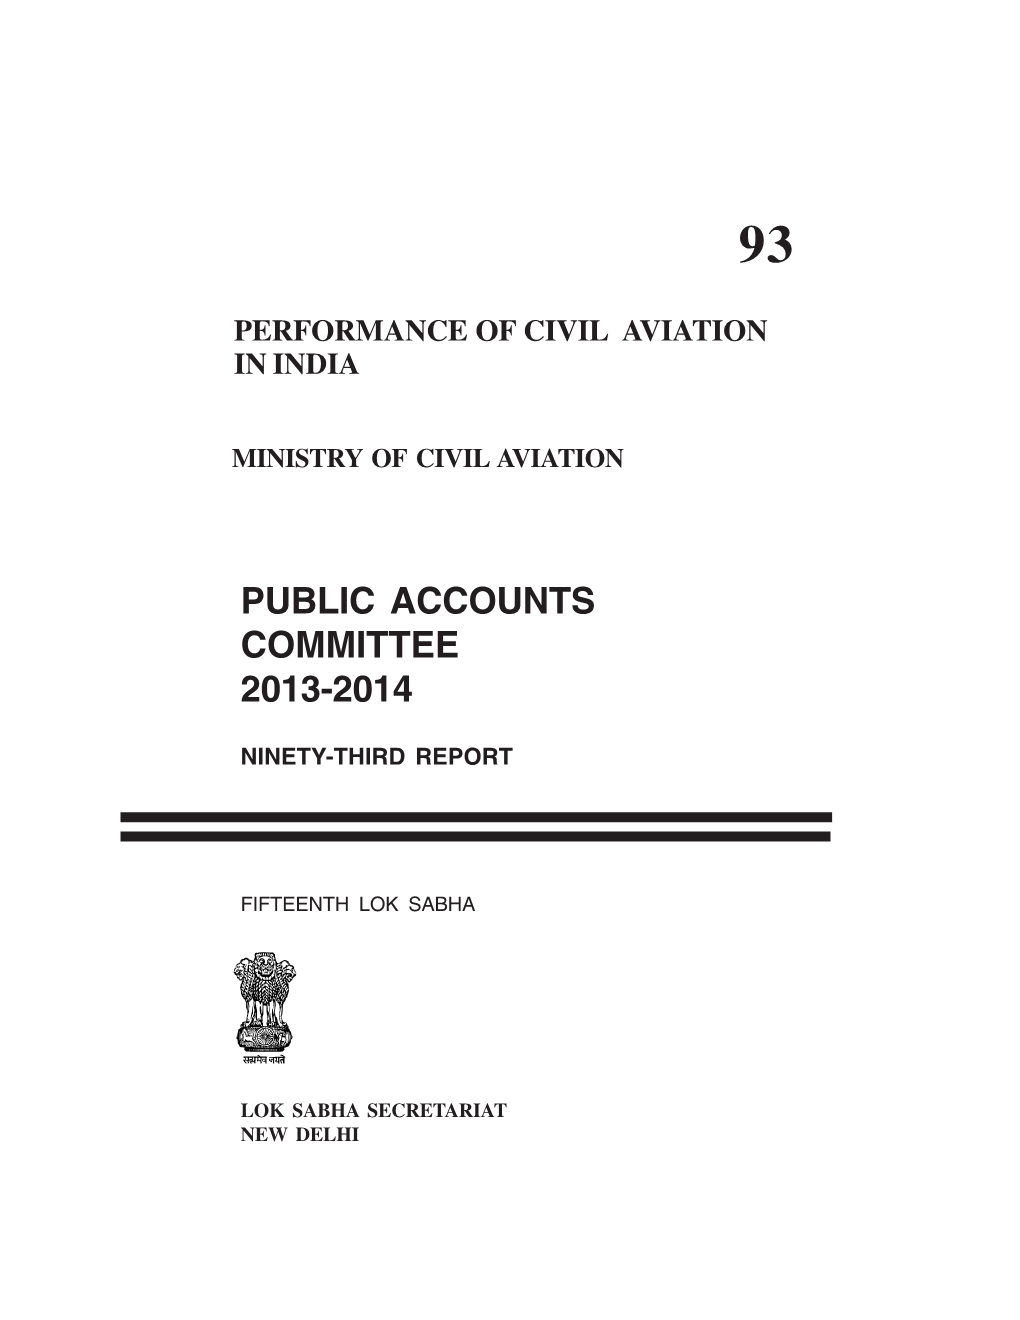 Public Accounts Committee 2013-2014